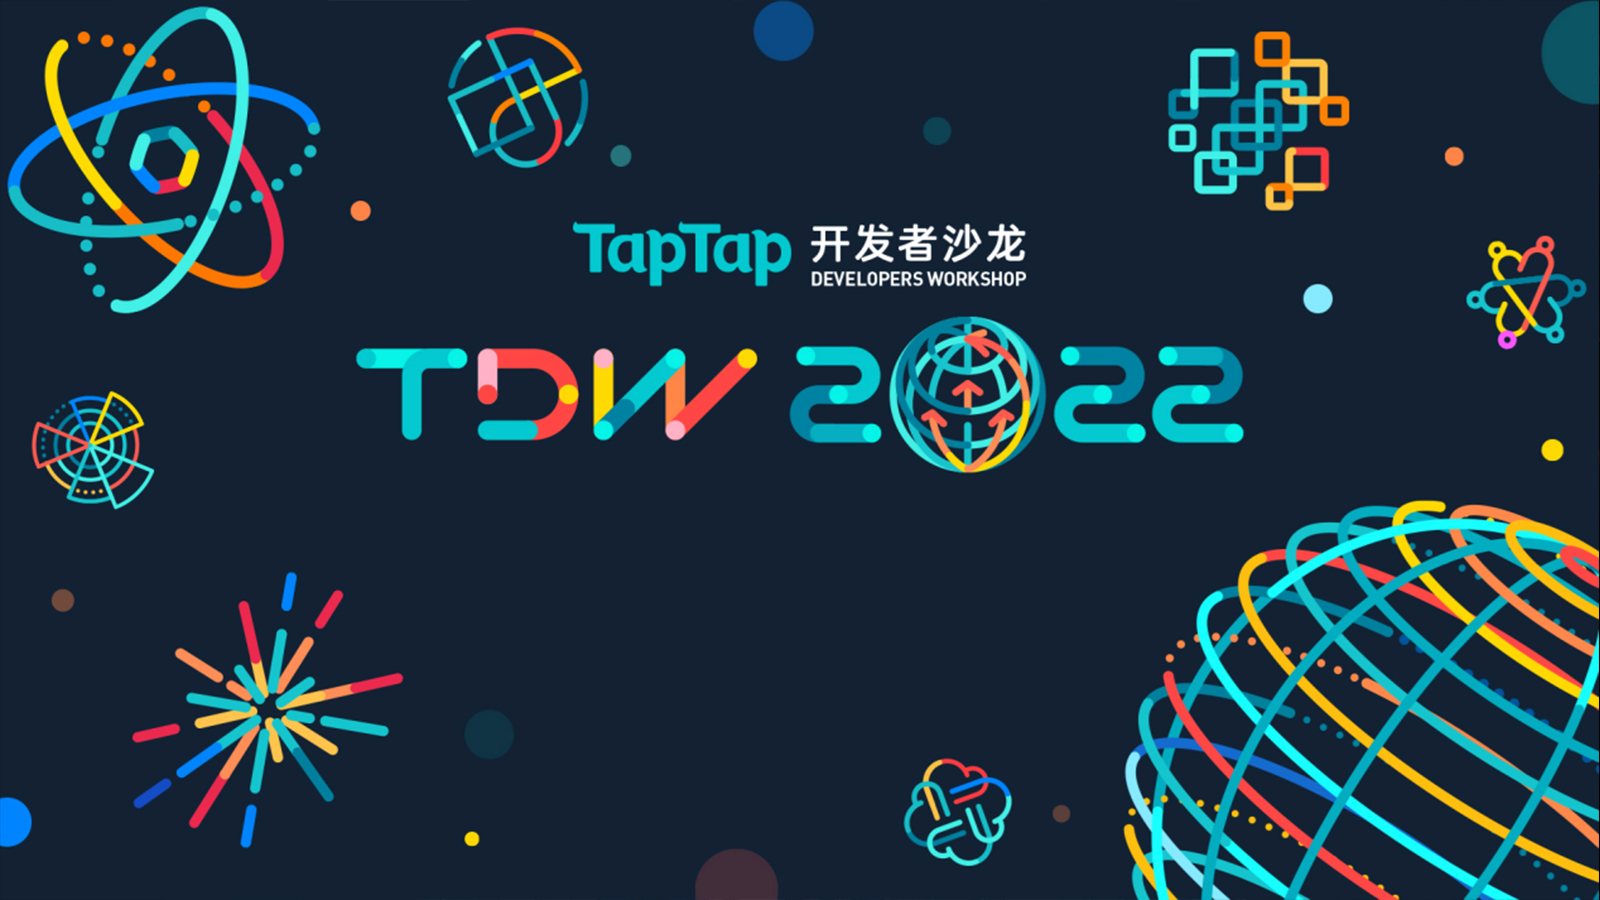 TDW 2022黄一孟：相信游戏价值，TapTap更紧密联结开发者